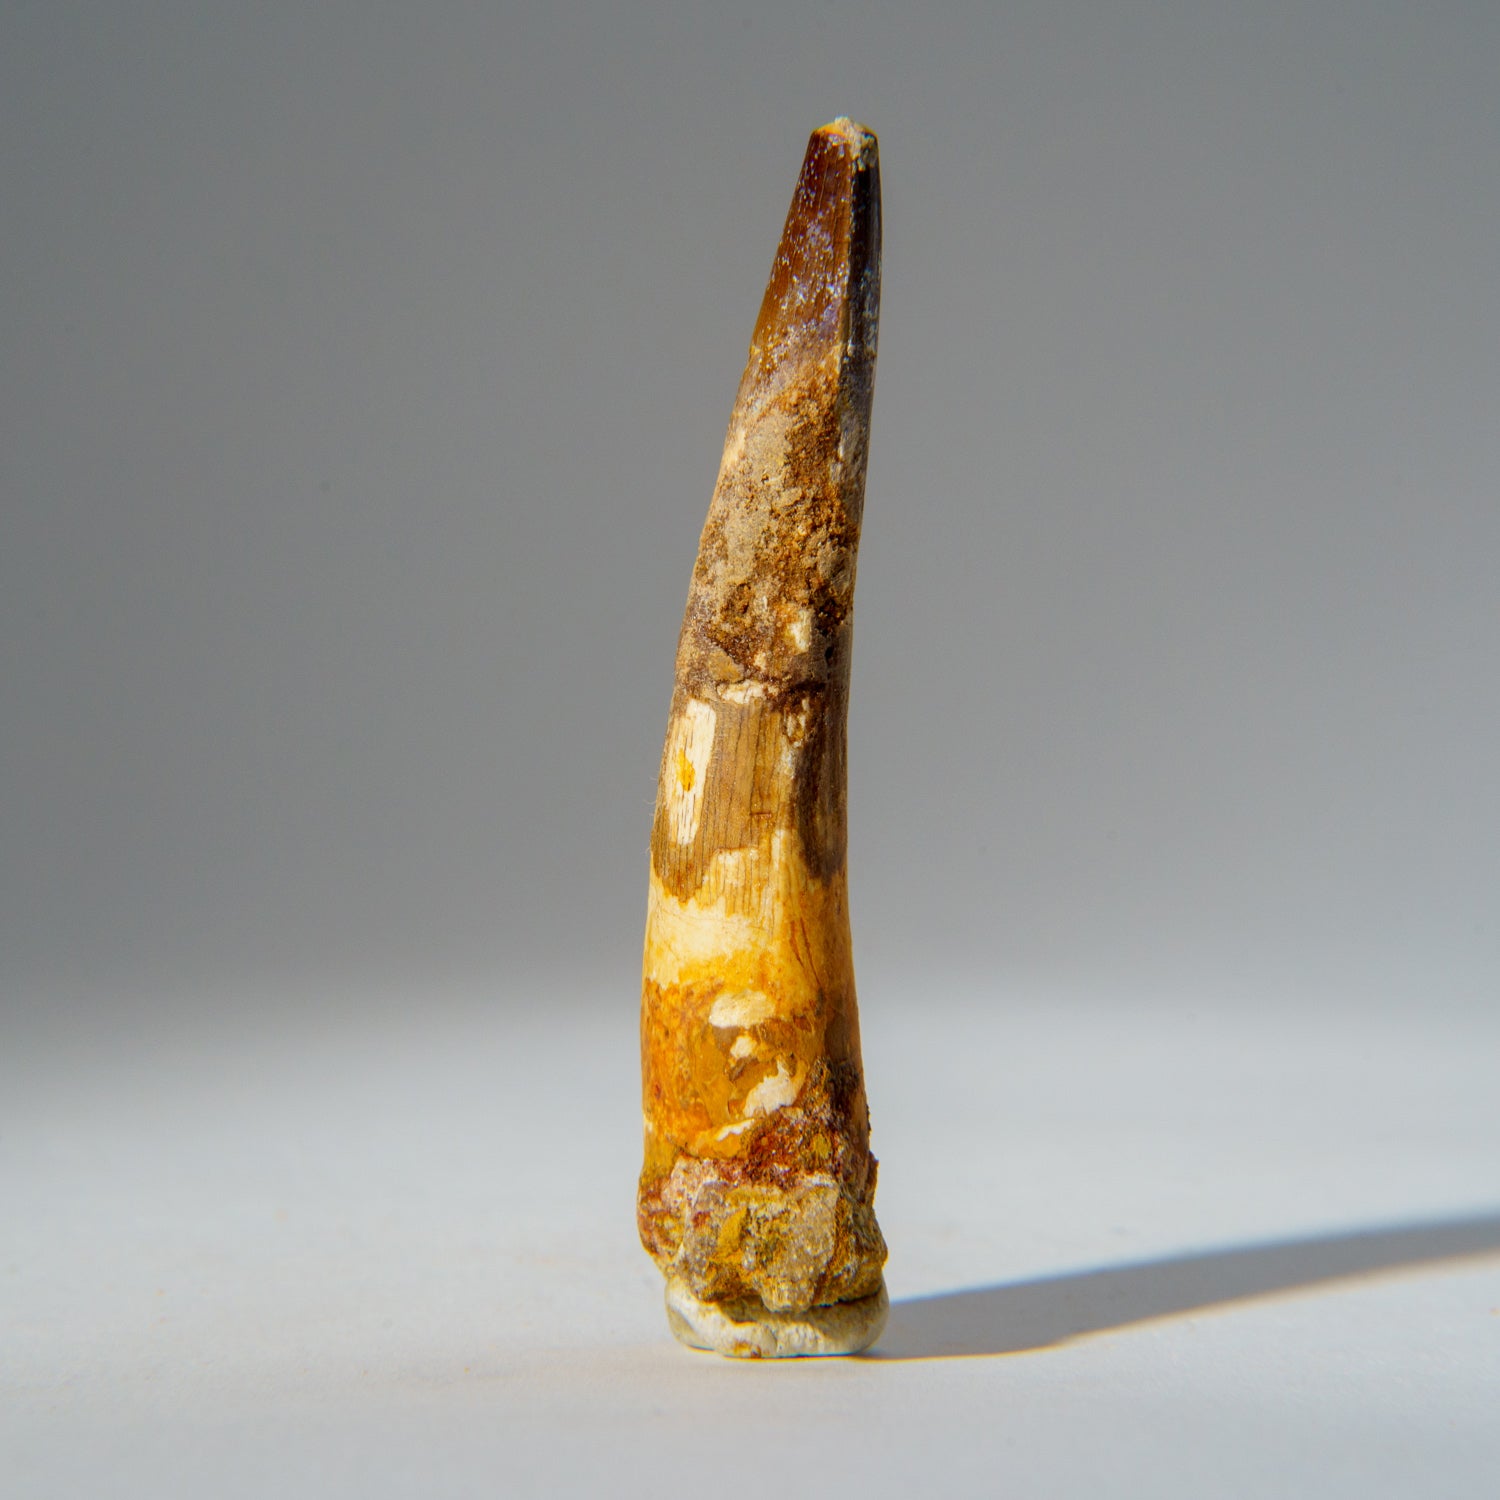 Genuine Carcharodontosaurus Tooth in Display Box (21.5 grams)